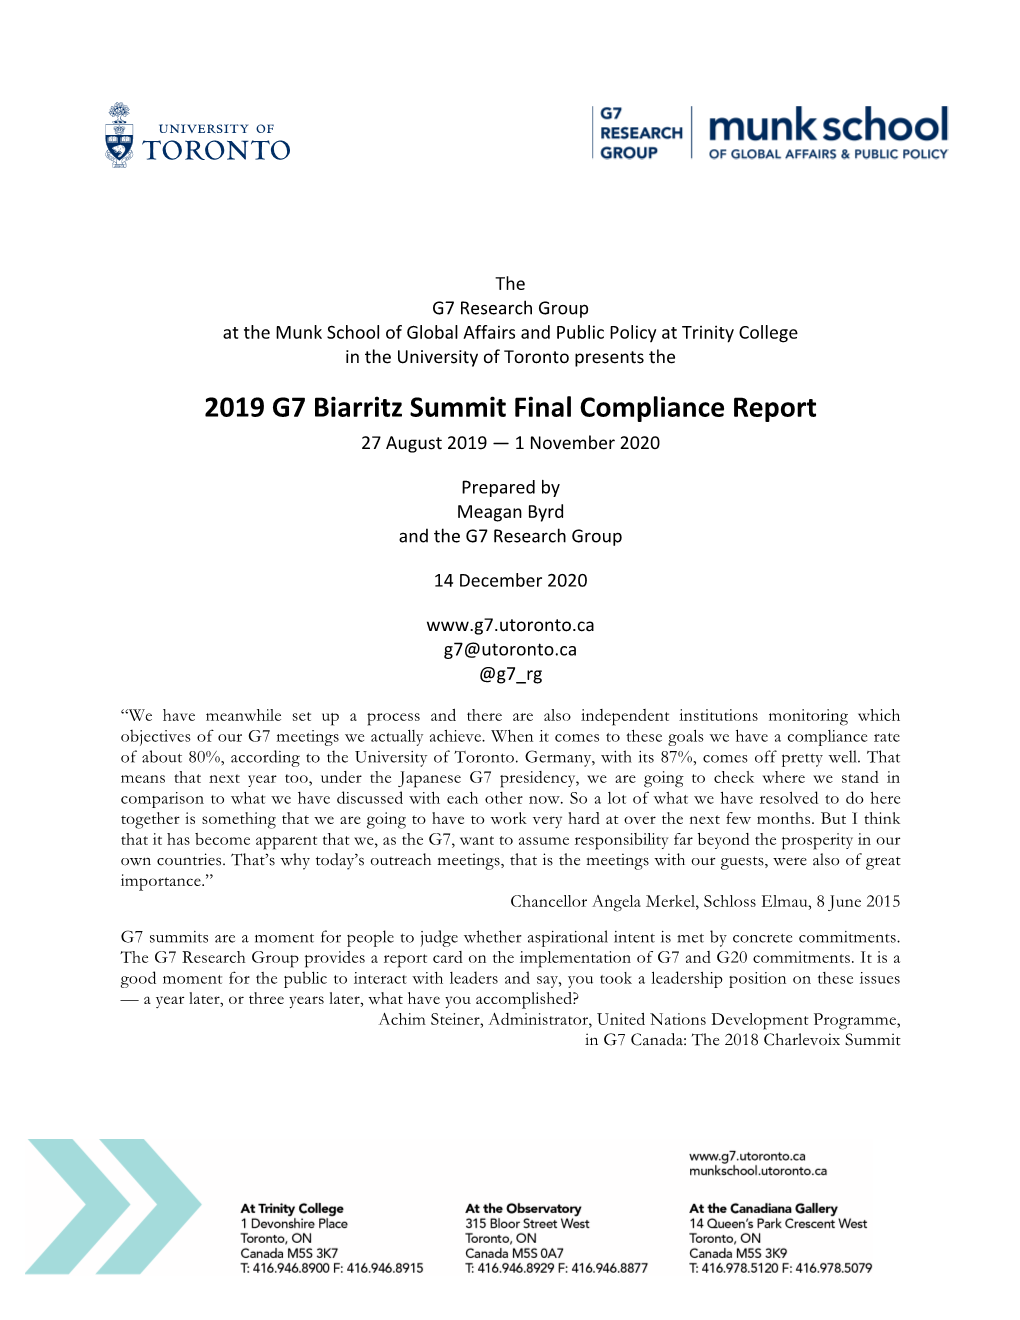 2019 G7 Biarritz Summit Final Compliance Report: Universal